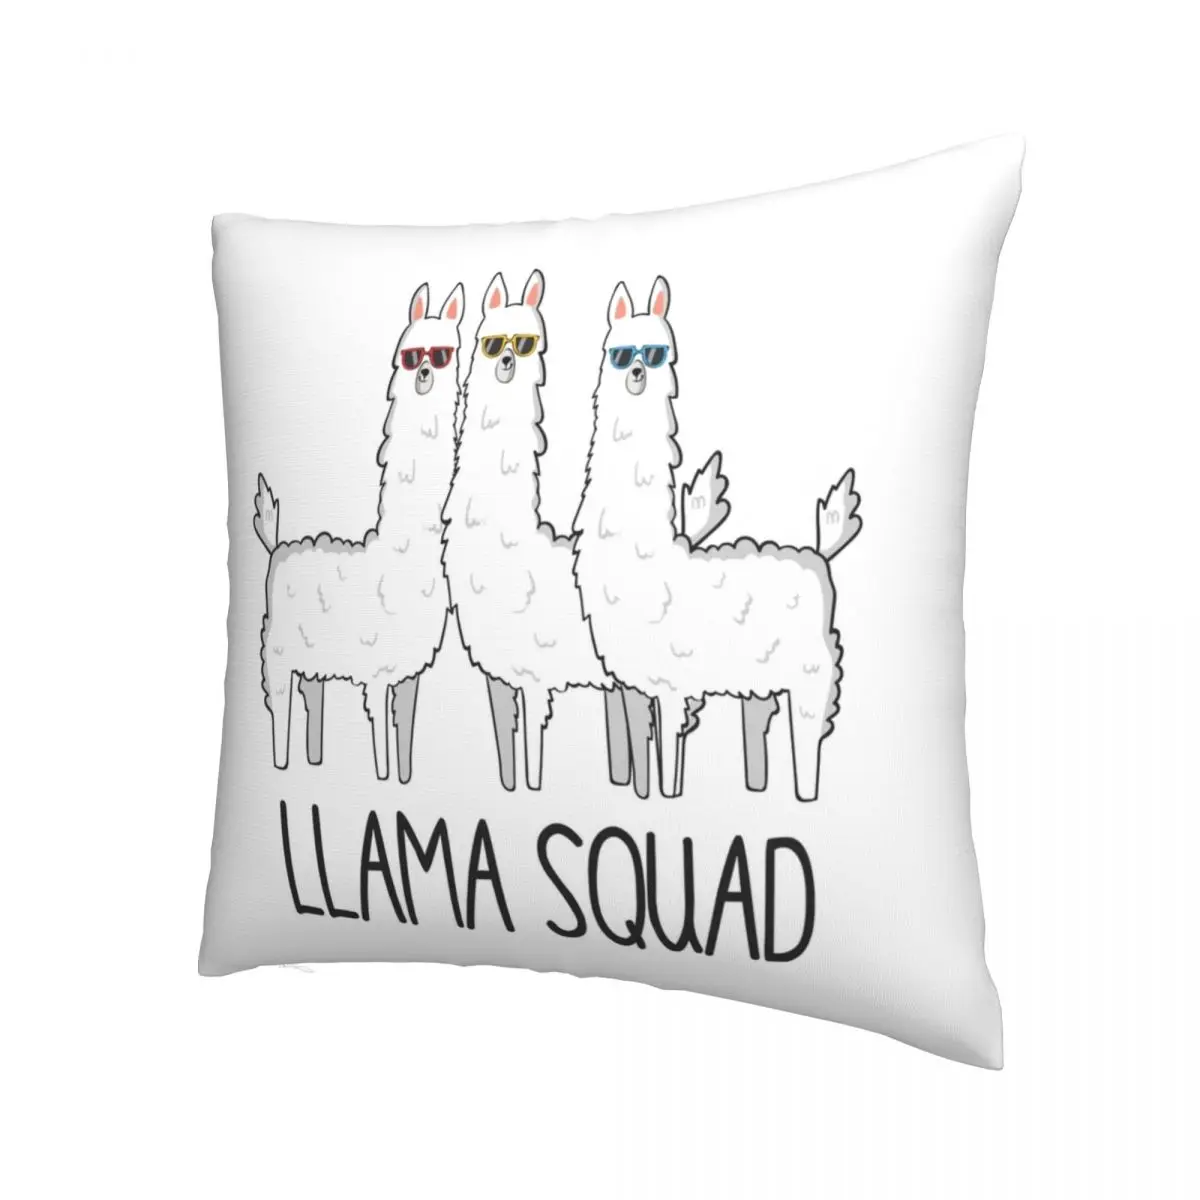 

Funny Cute Llama T Shirt Llama Squad Alpaca Pillowcase Cushion Cover Decorative Animal Pillow Case Cover Home Square 40*40cm